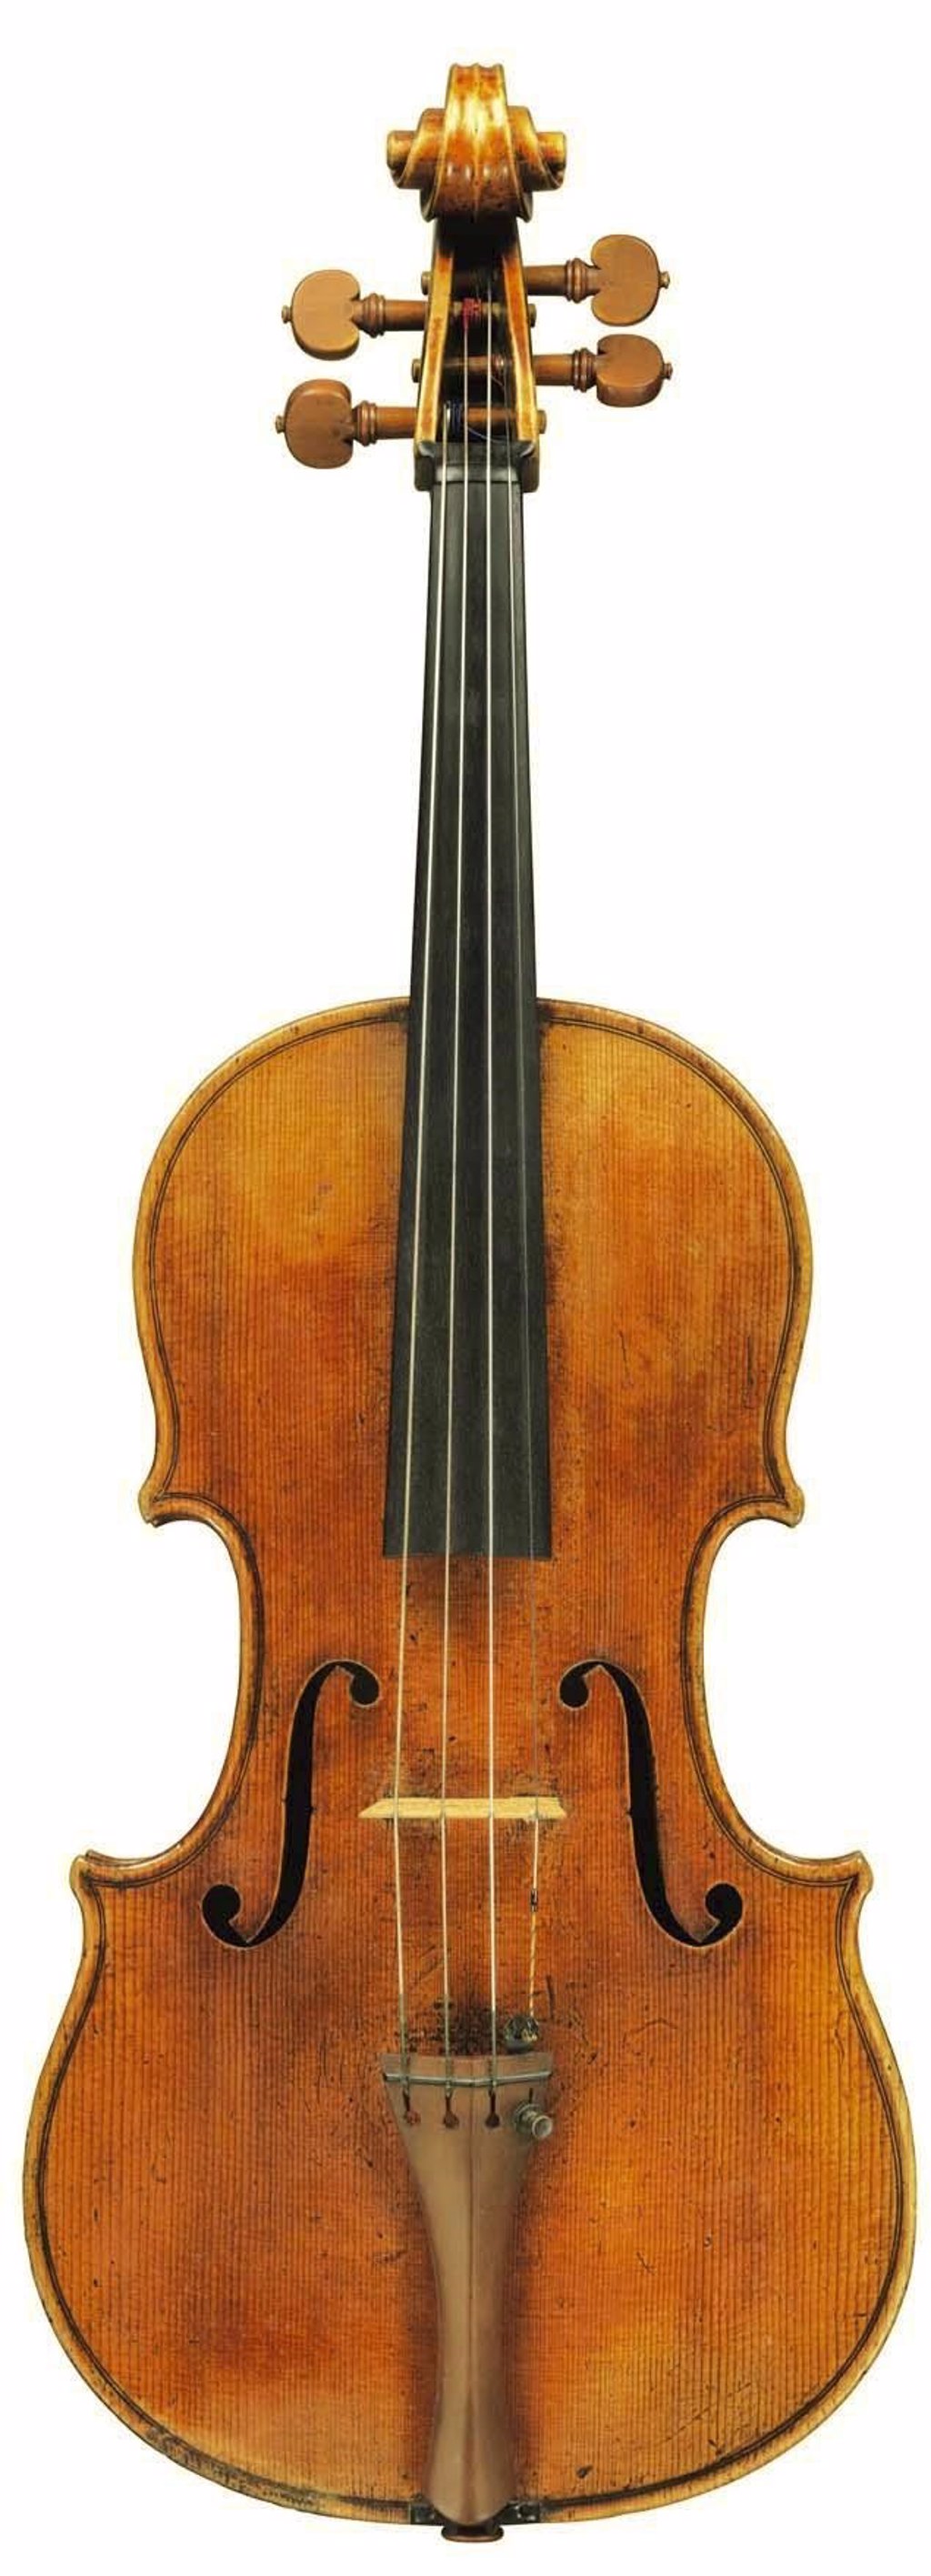 A Subasta La Mejor Viola Del Mundo Macdonald De Stradivarius